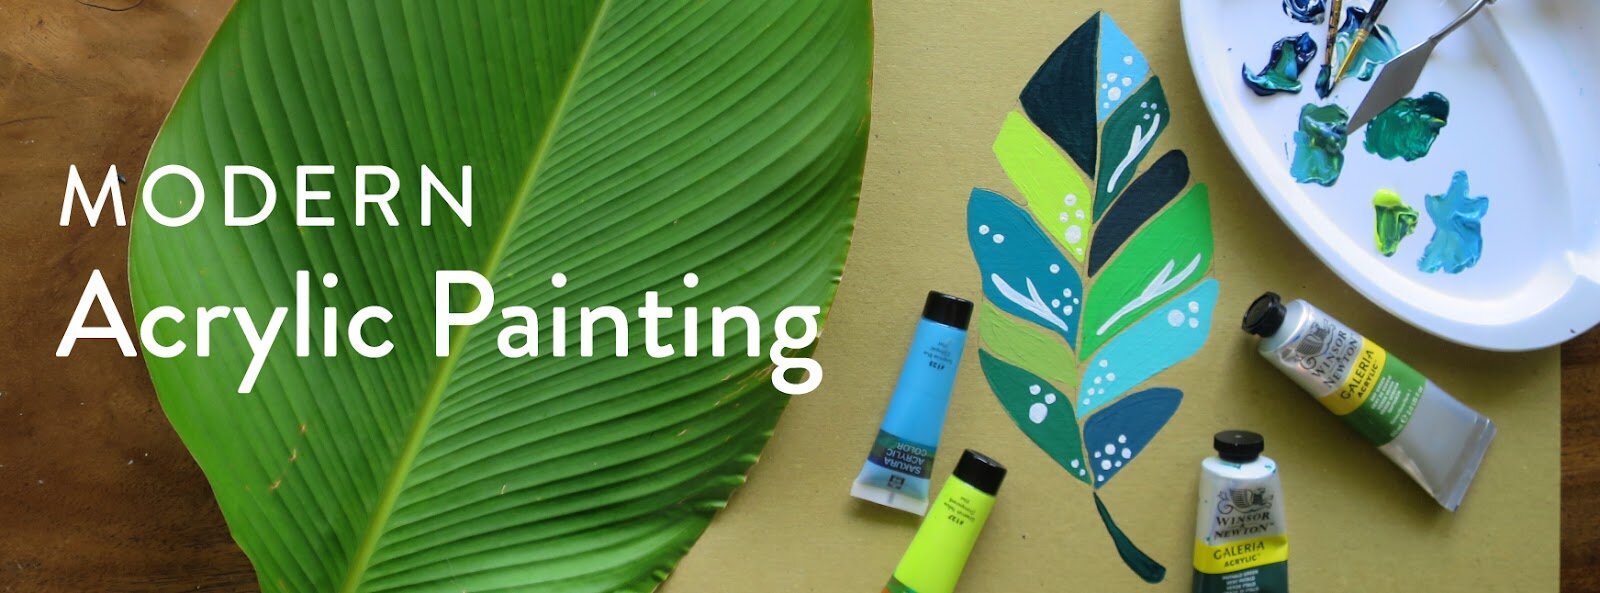 Airbrushing Tips 'n Tricks v2: Spraying Acrylic Paints